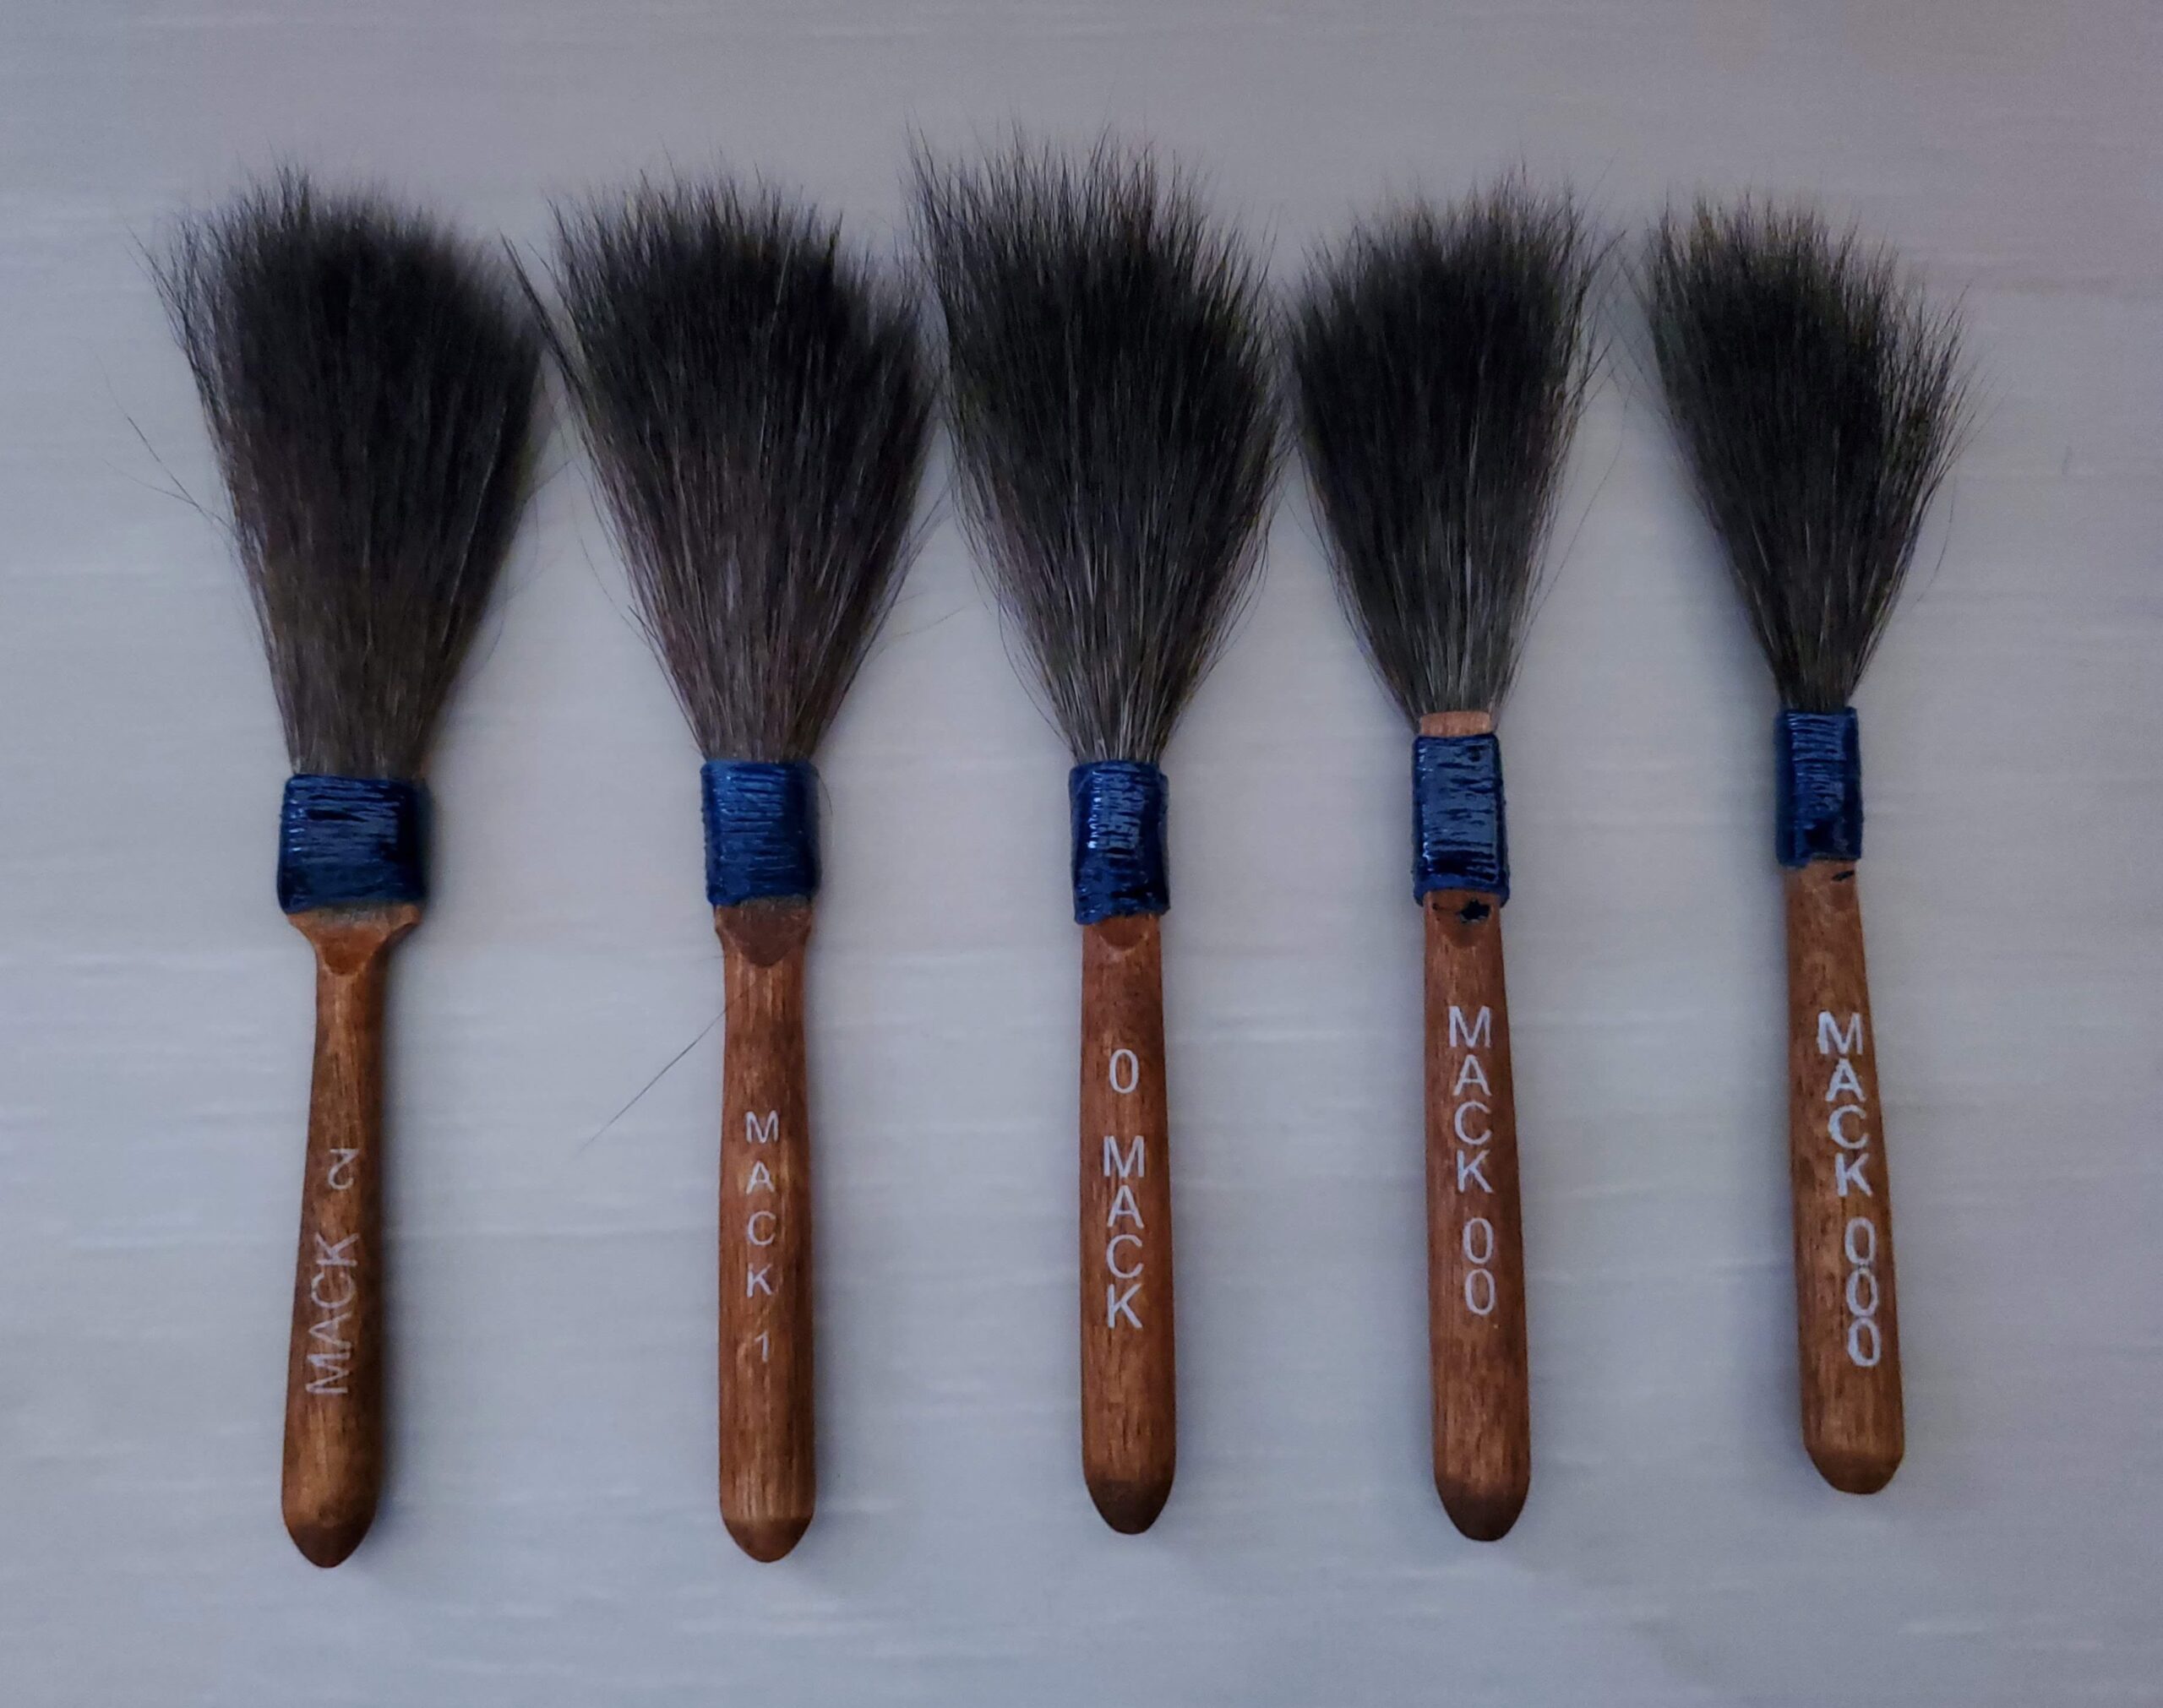 Original Mack Pinstriping Brush – Blue Ridge Sign Supply Inc